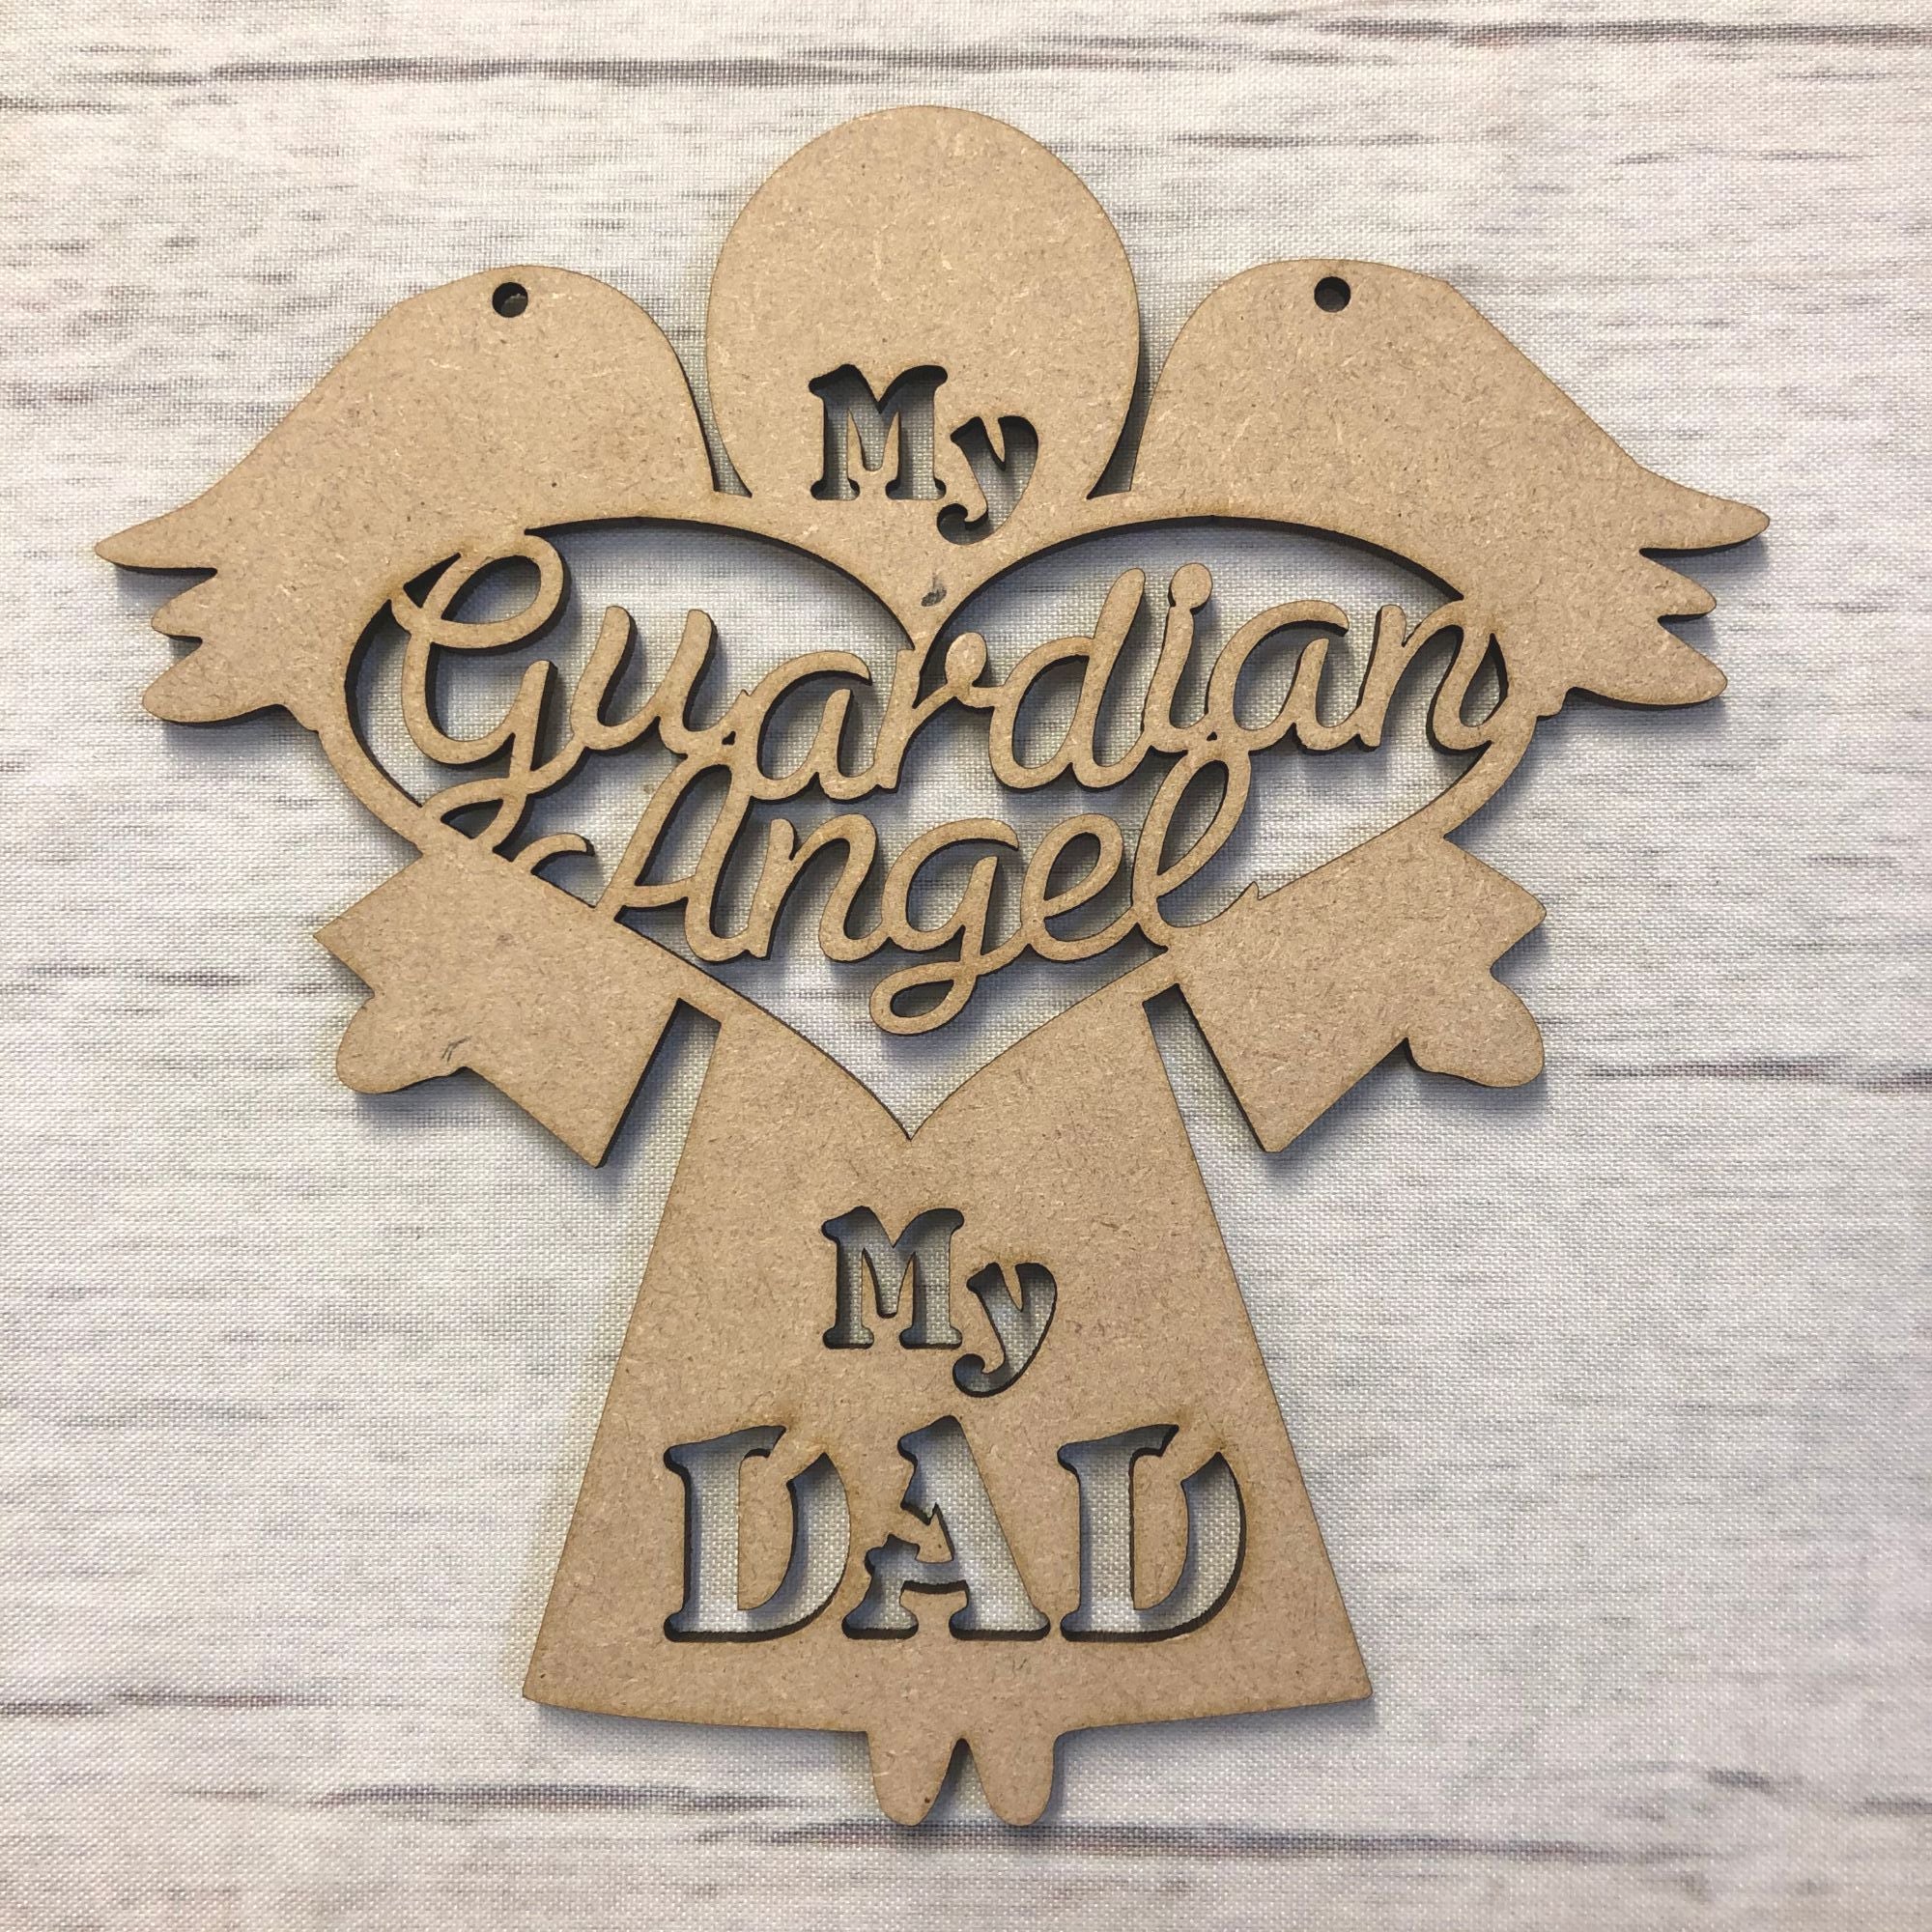 My guardian angel, my Dad' - craft hanger